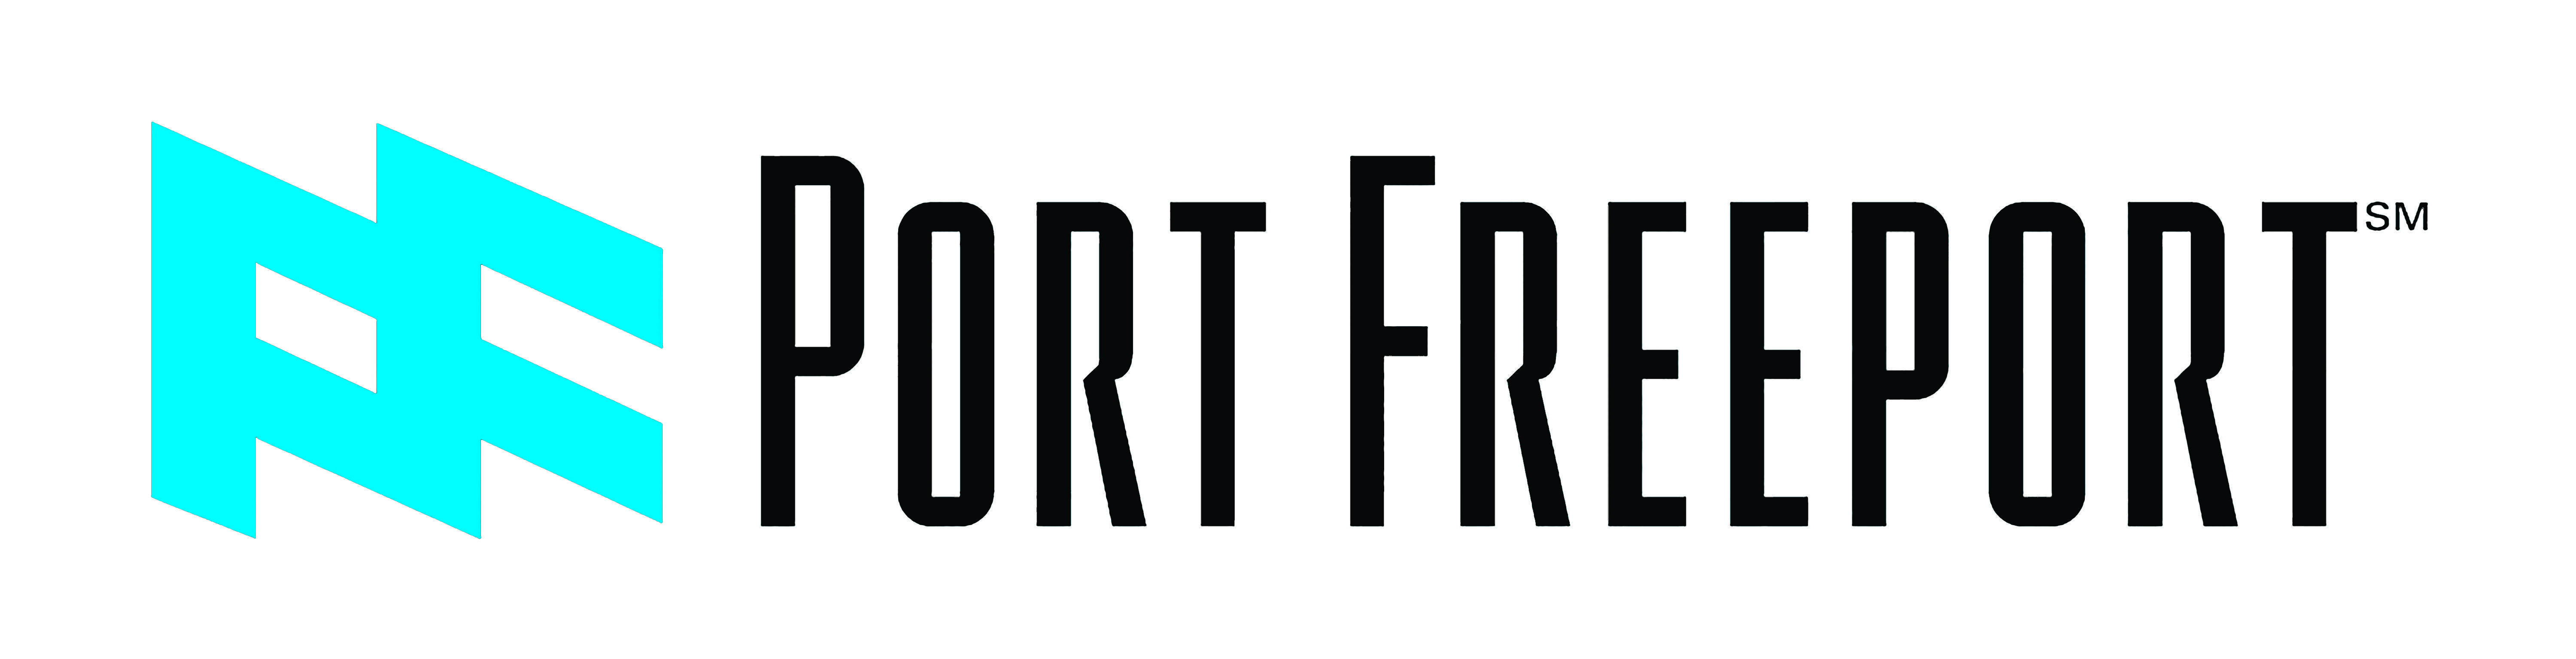 Freeport Logo - Port Freeport | Ports in TX | Media Library